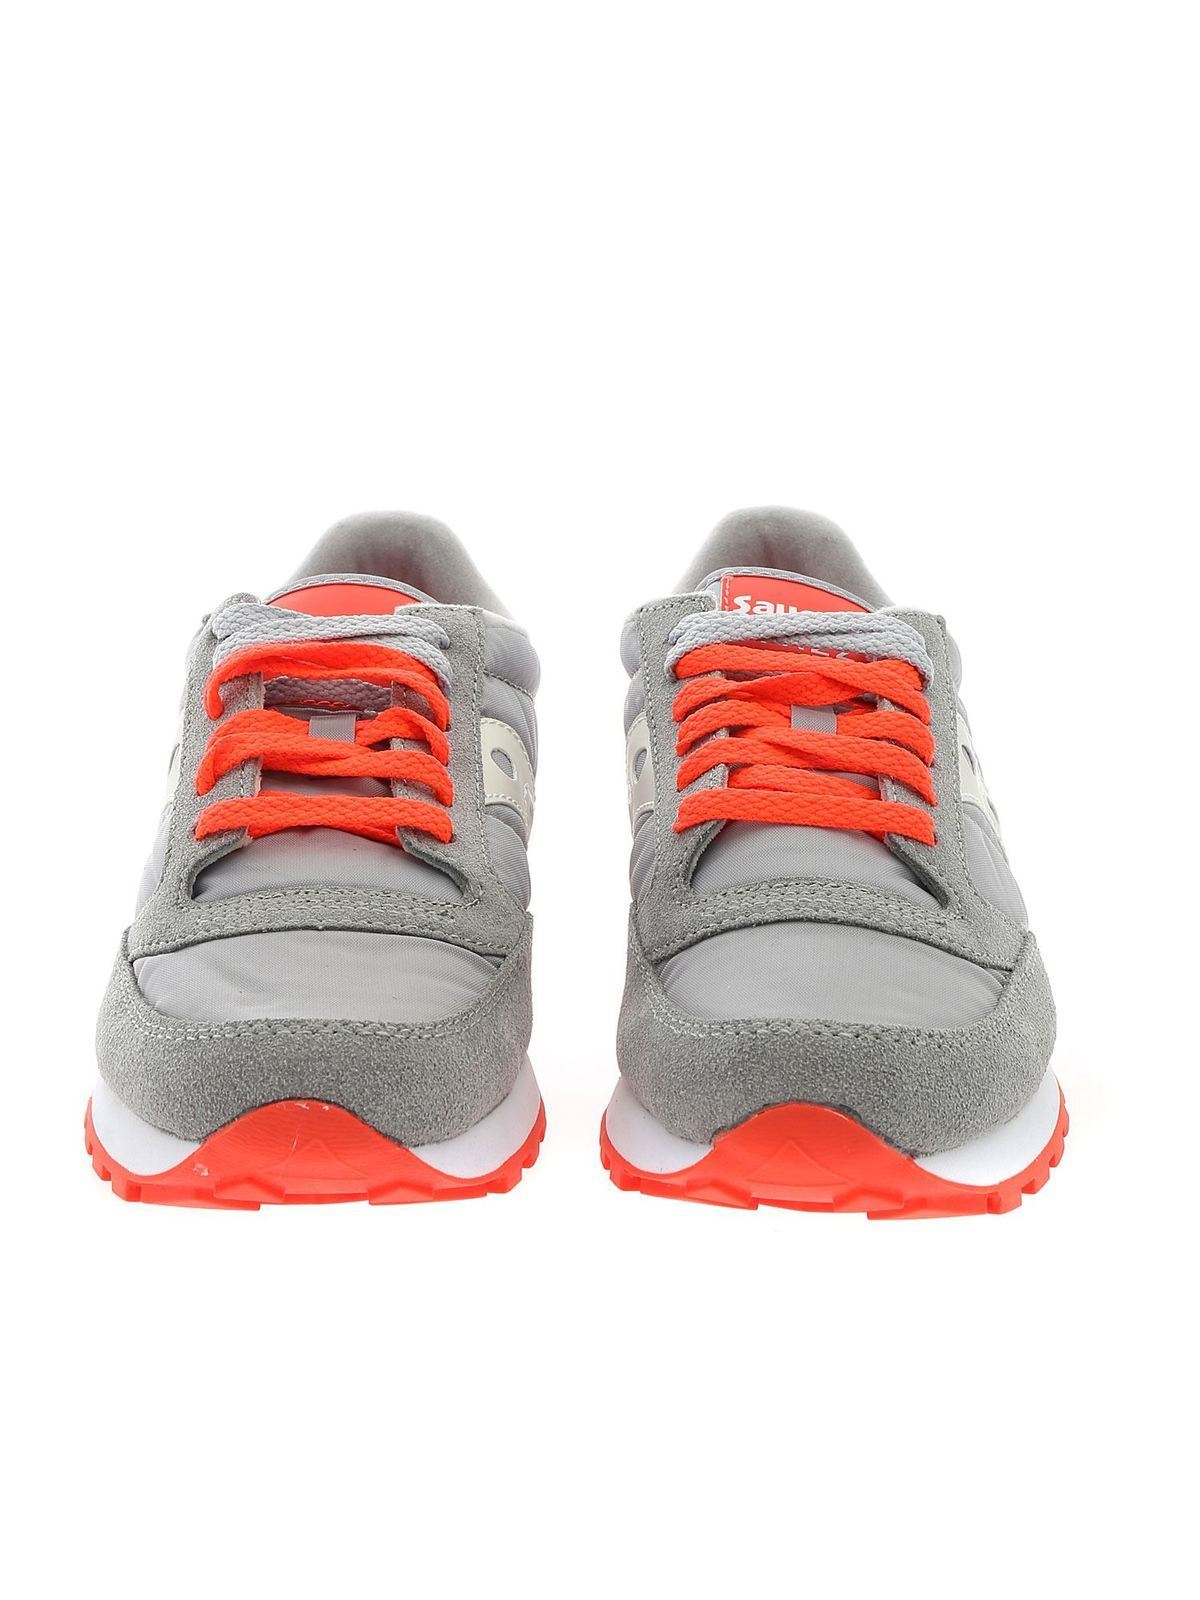 grey and orange trainers